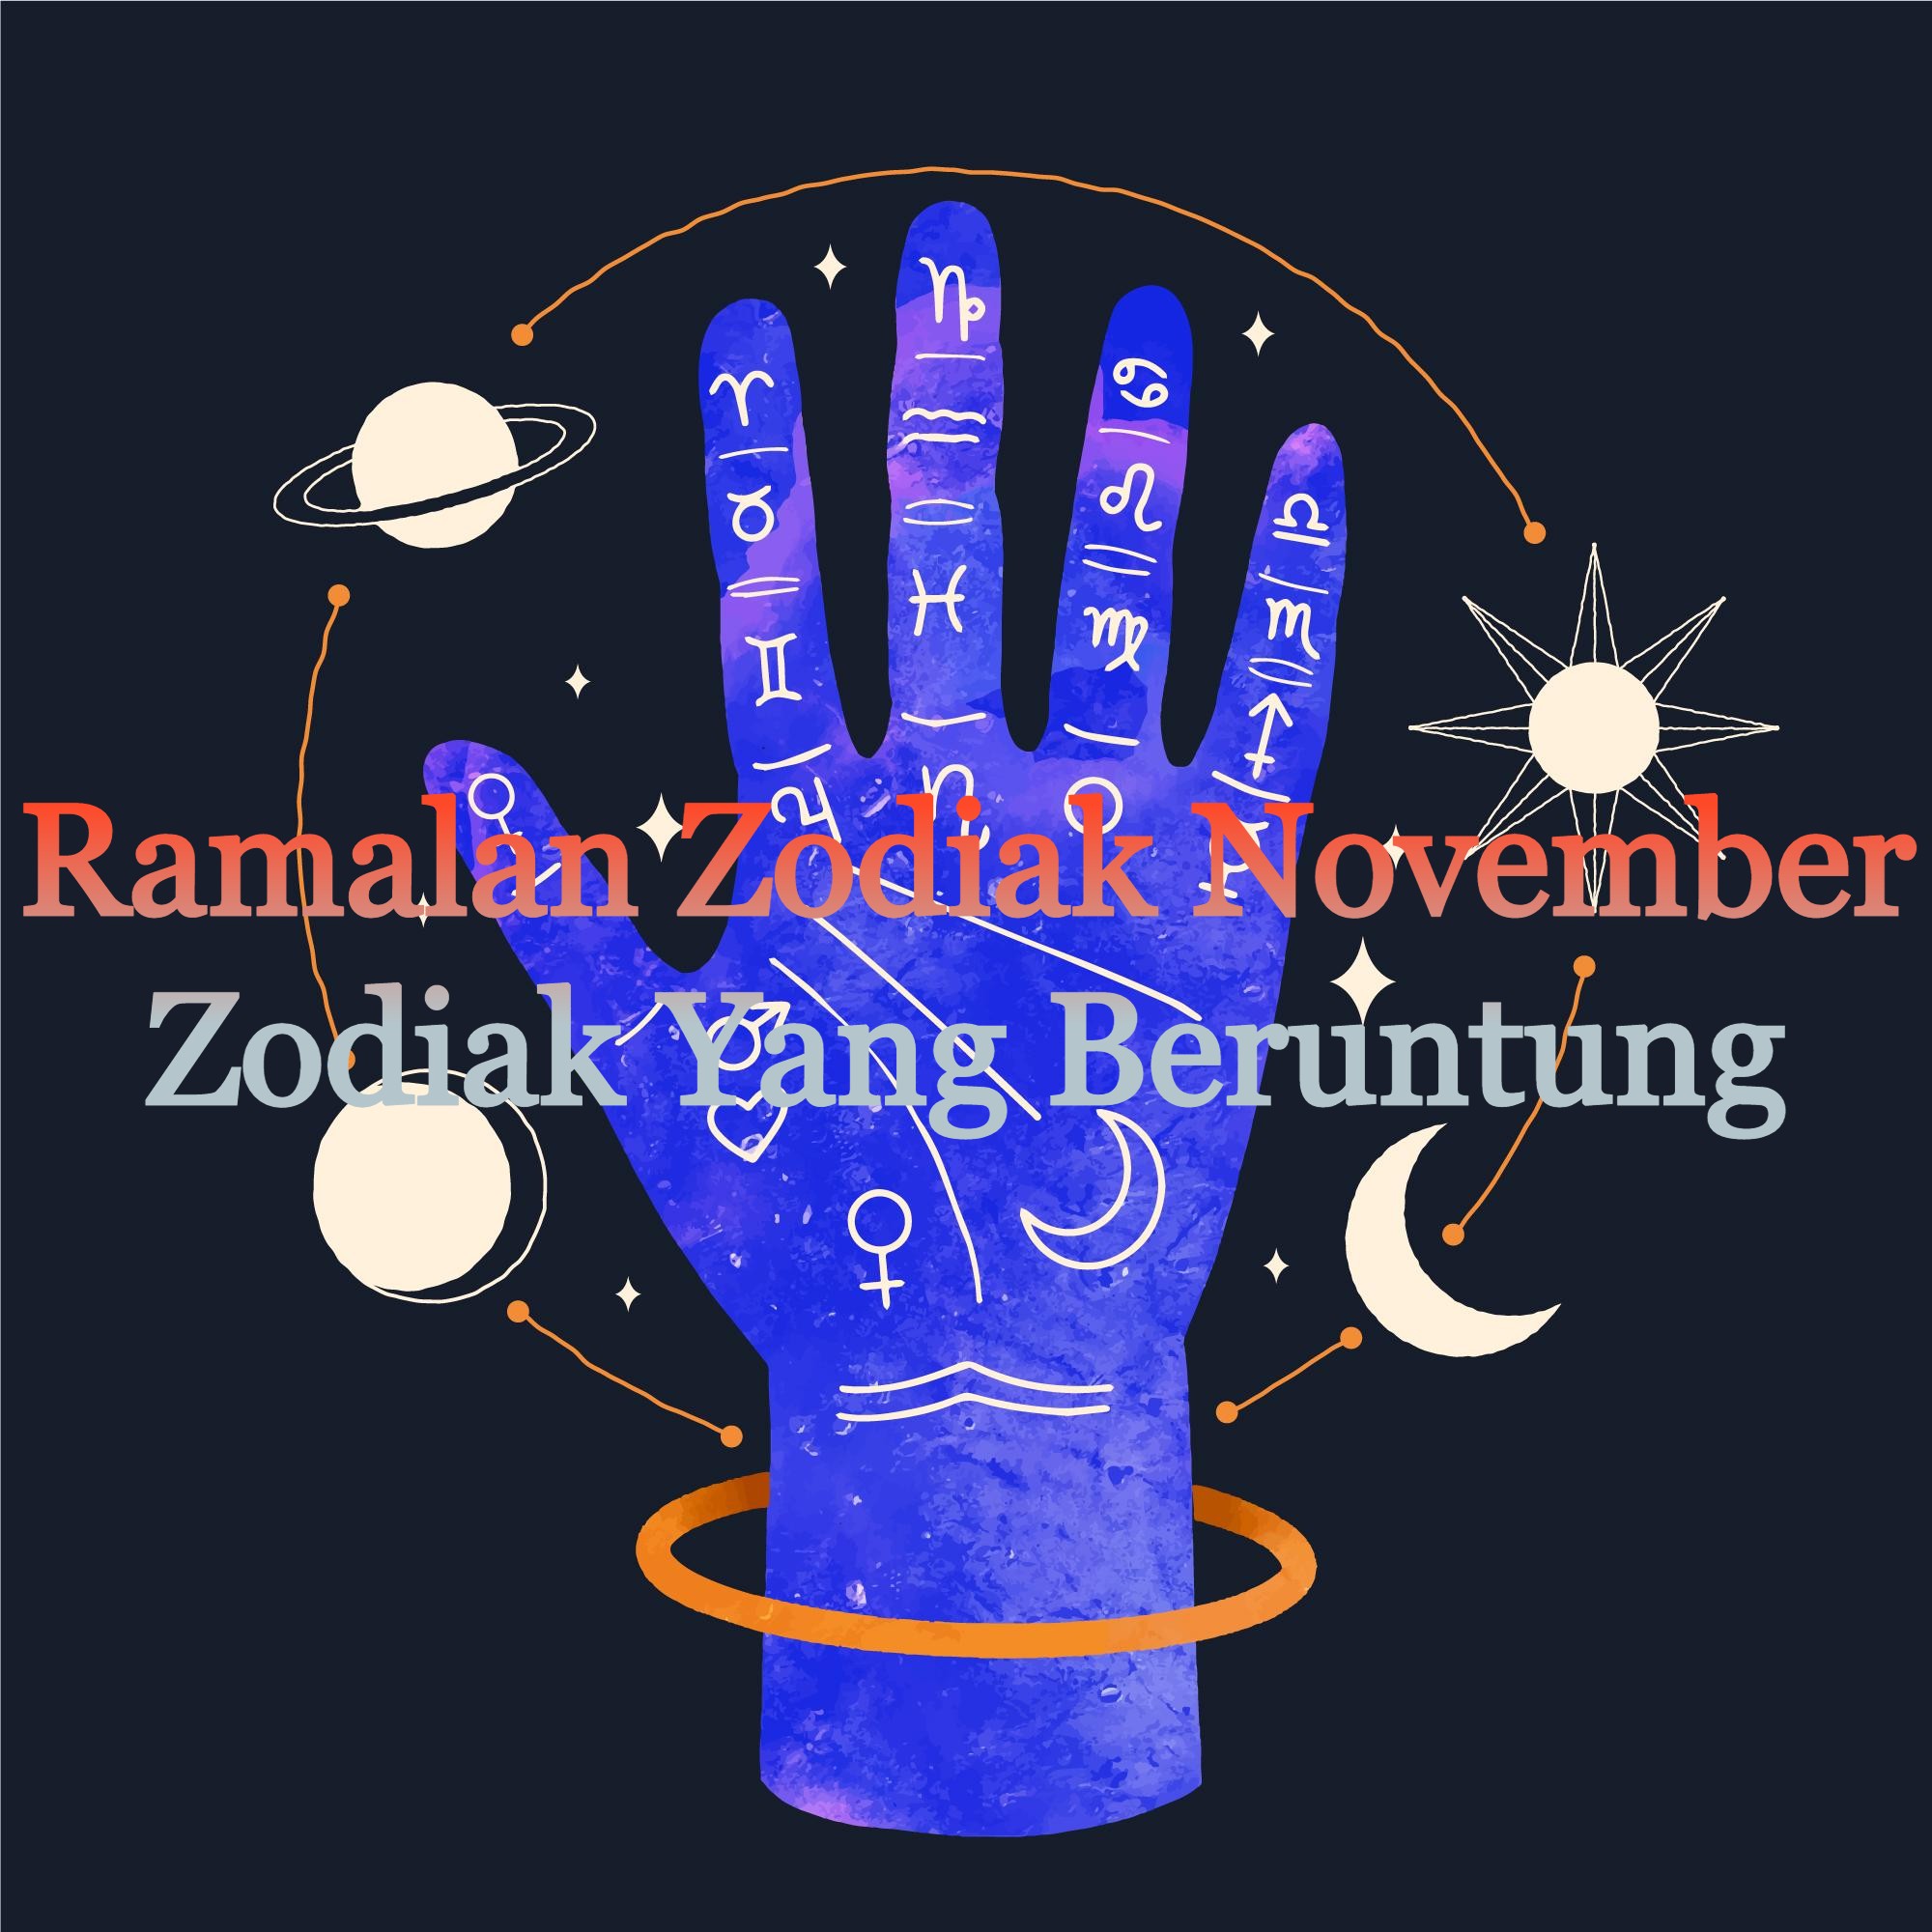 Ramalan zodiak November